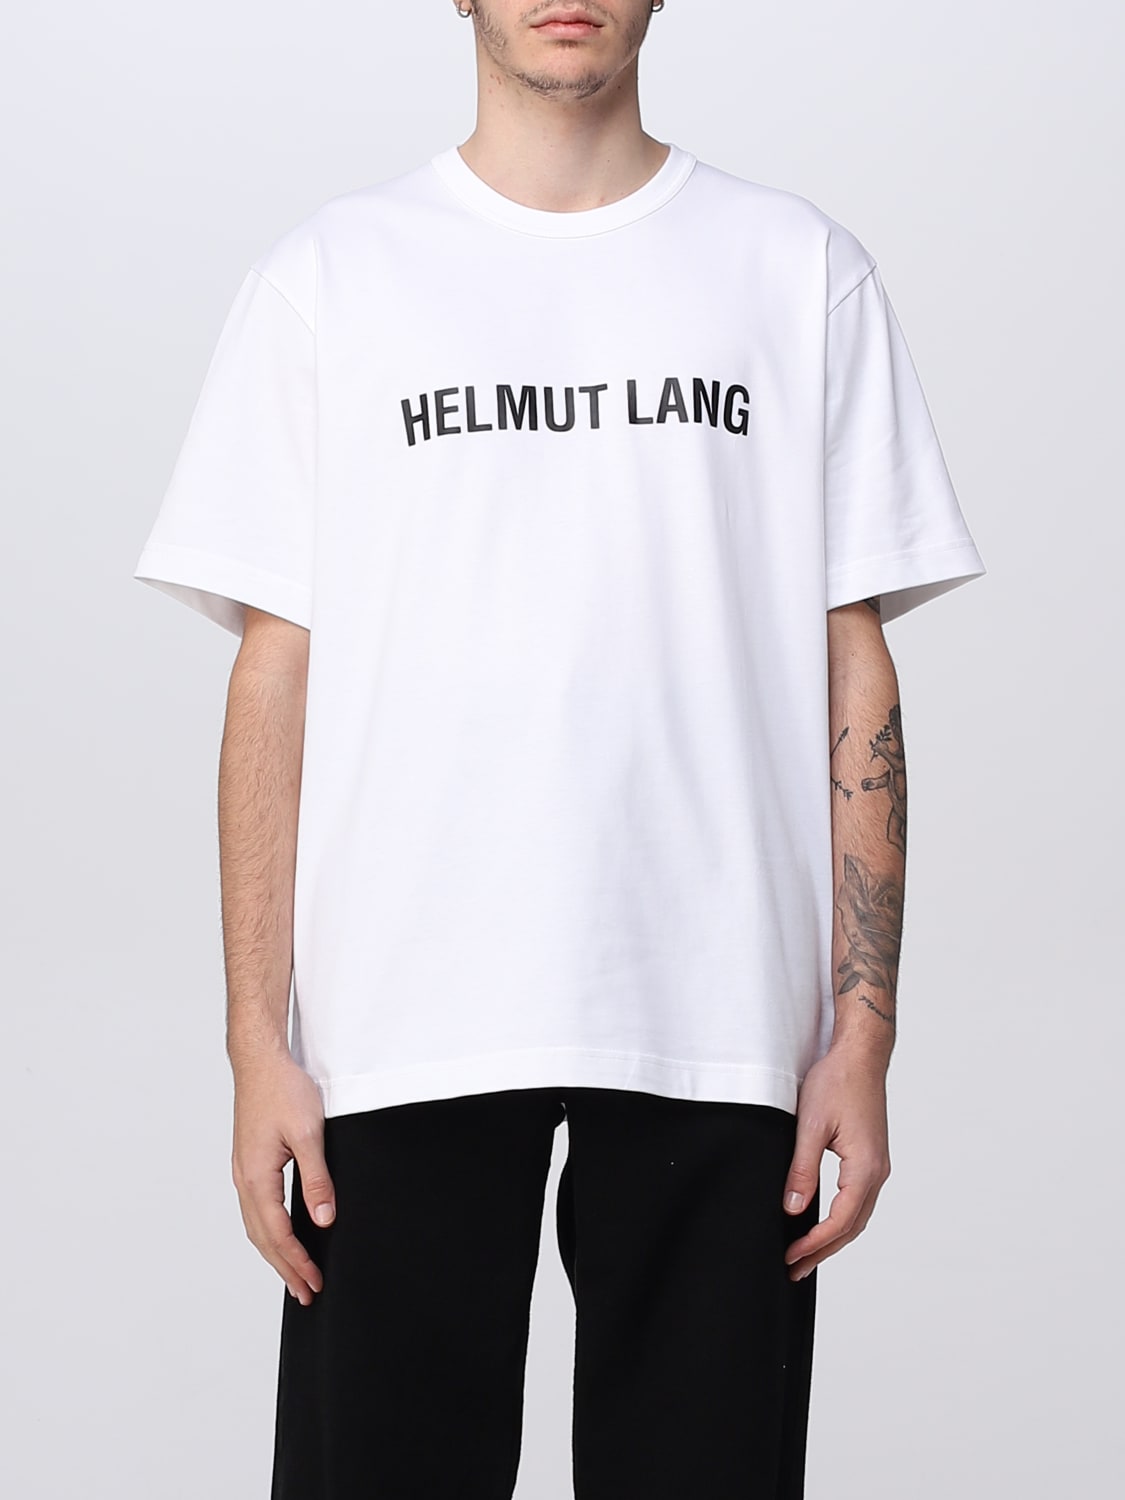 TシャツHELMUT LANG T-shirt men'sS